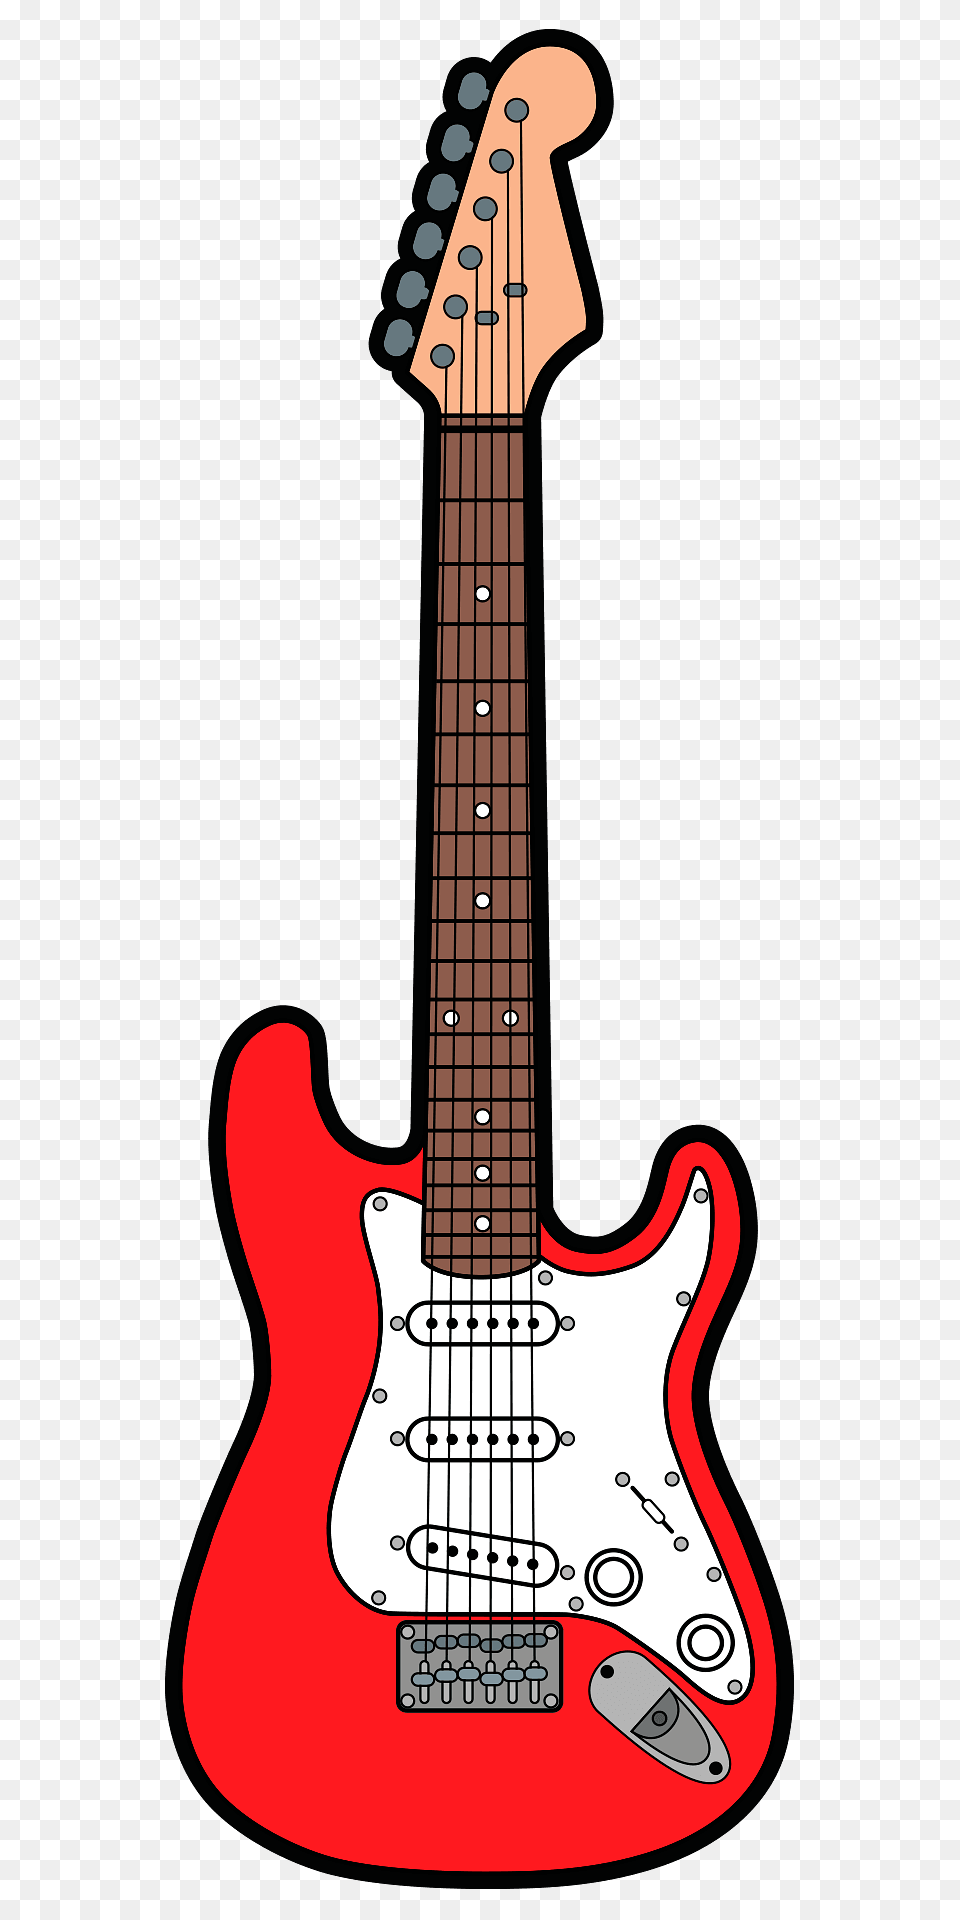 Guitar Clipart, Bass Guitar, Musical Instrument, Electric Guitar Png